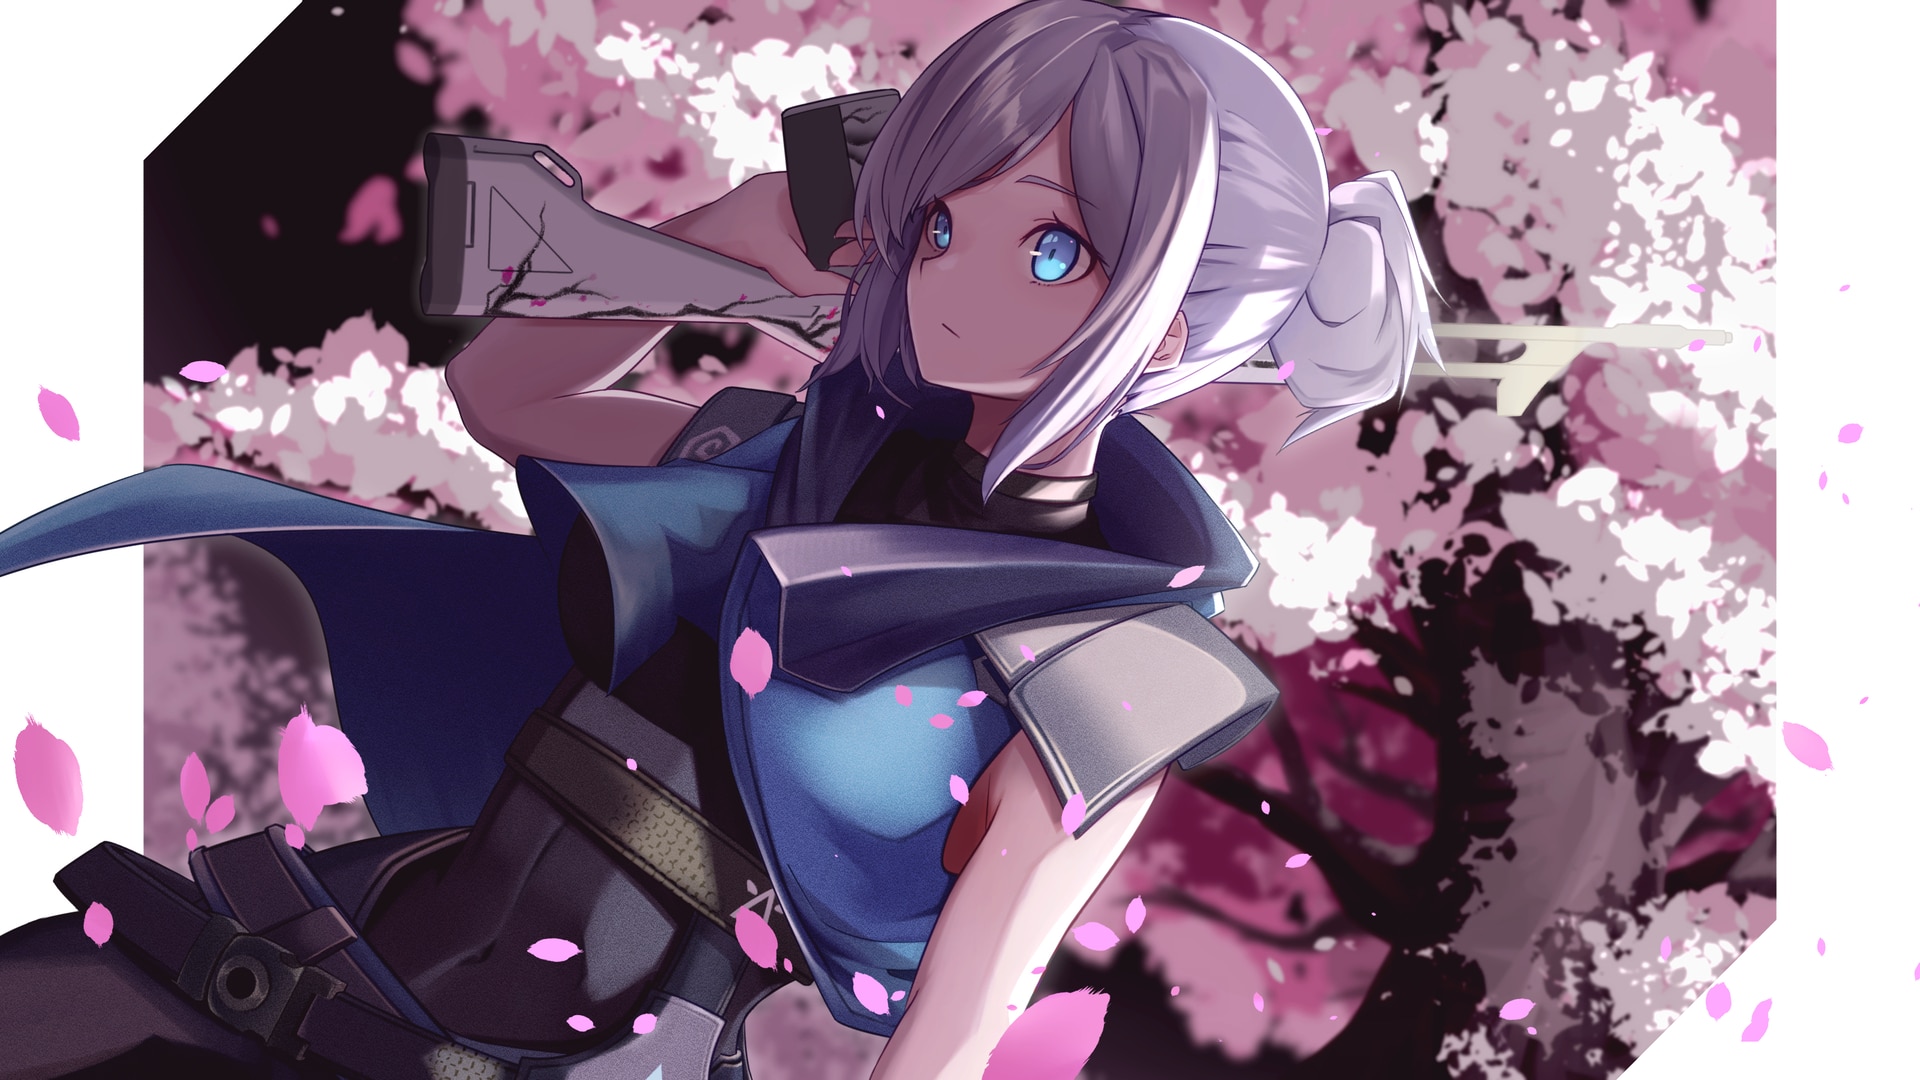 Image by K/O – Jett holding the Sakura Valorant skin with a Sakura tree in the background.